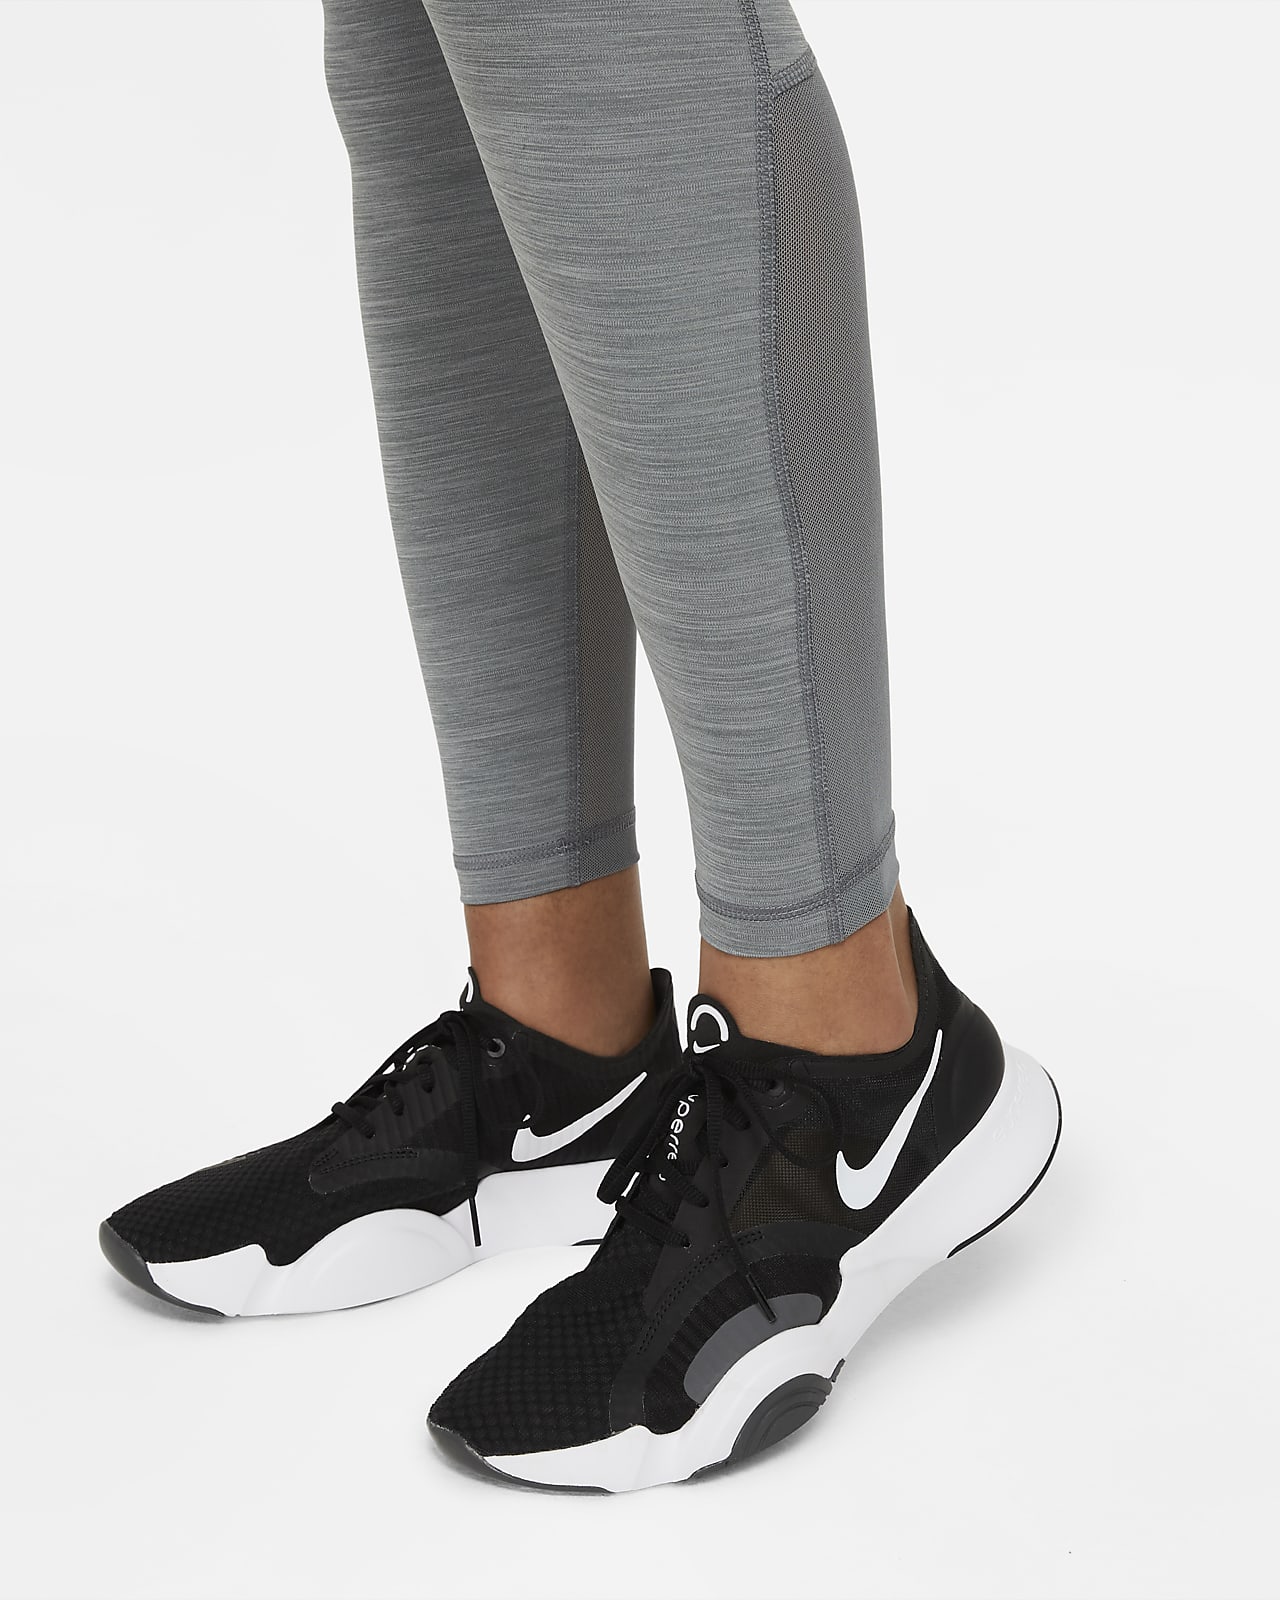 Nike Pro Womens XS Black Silver Shimmer Leggings Full Length Activewear  Athletic 